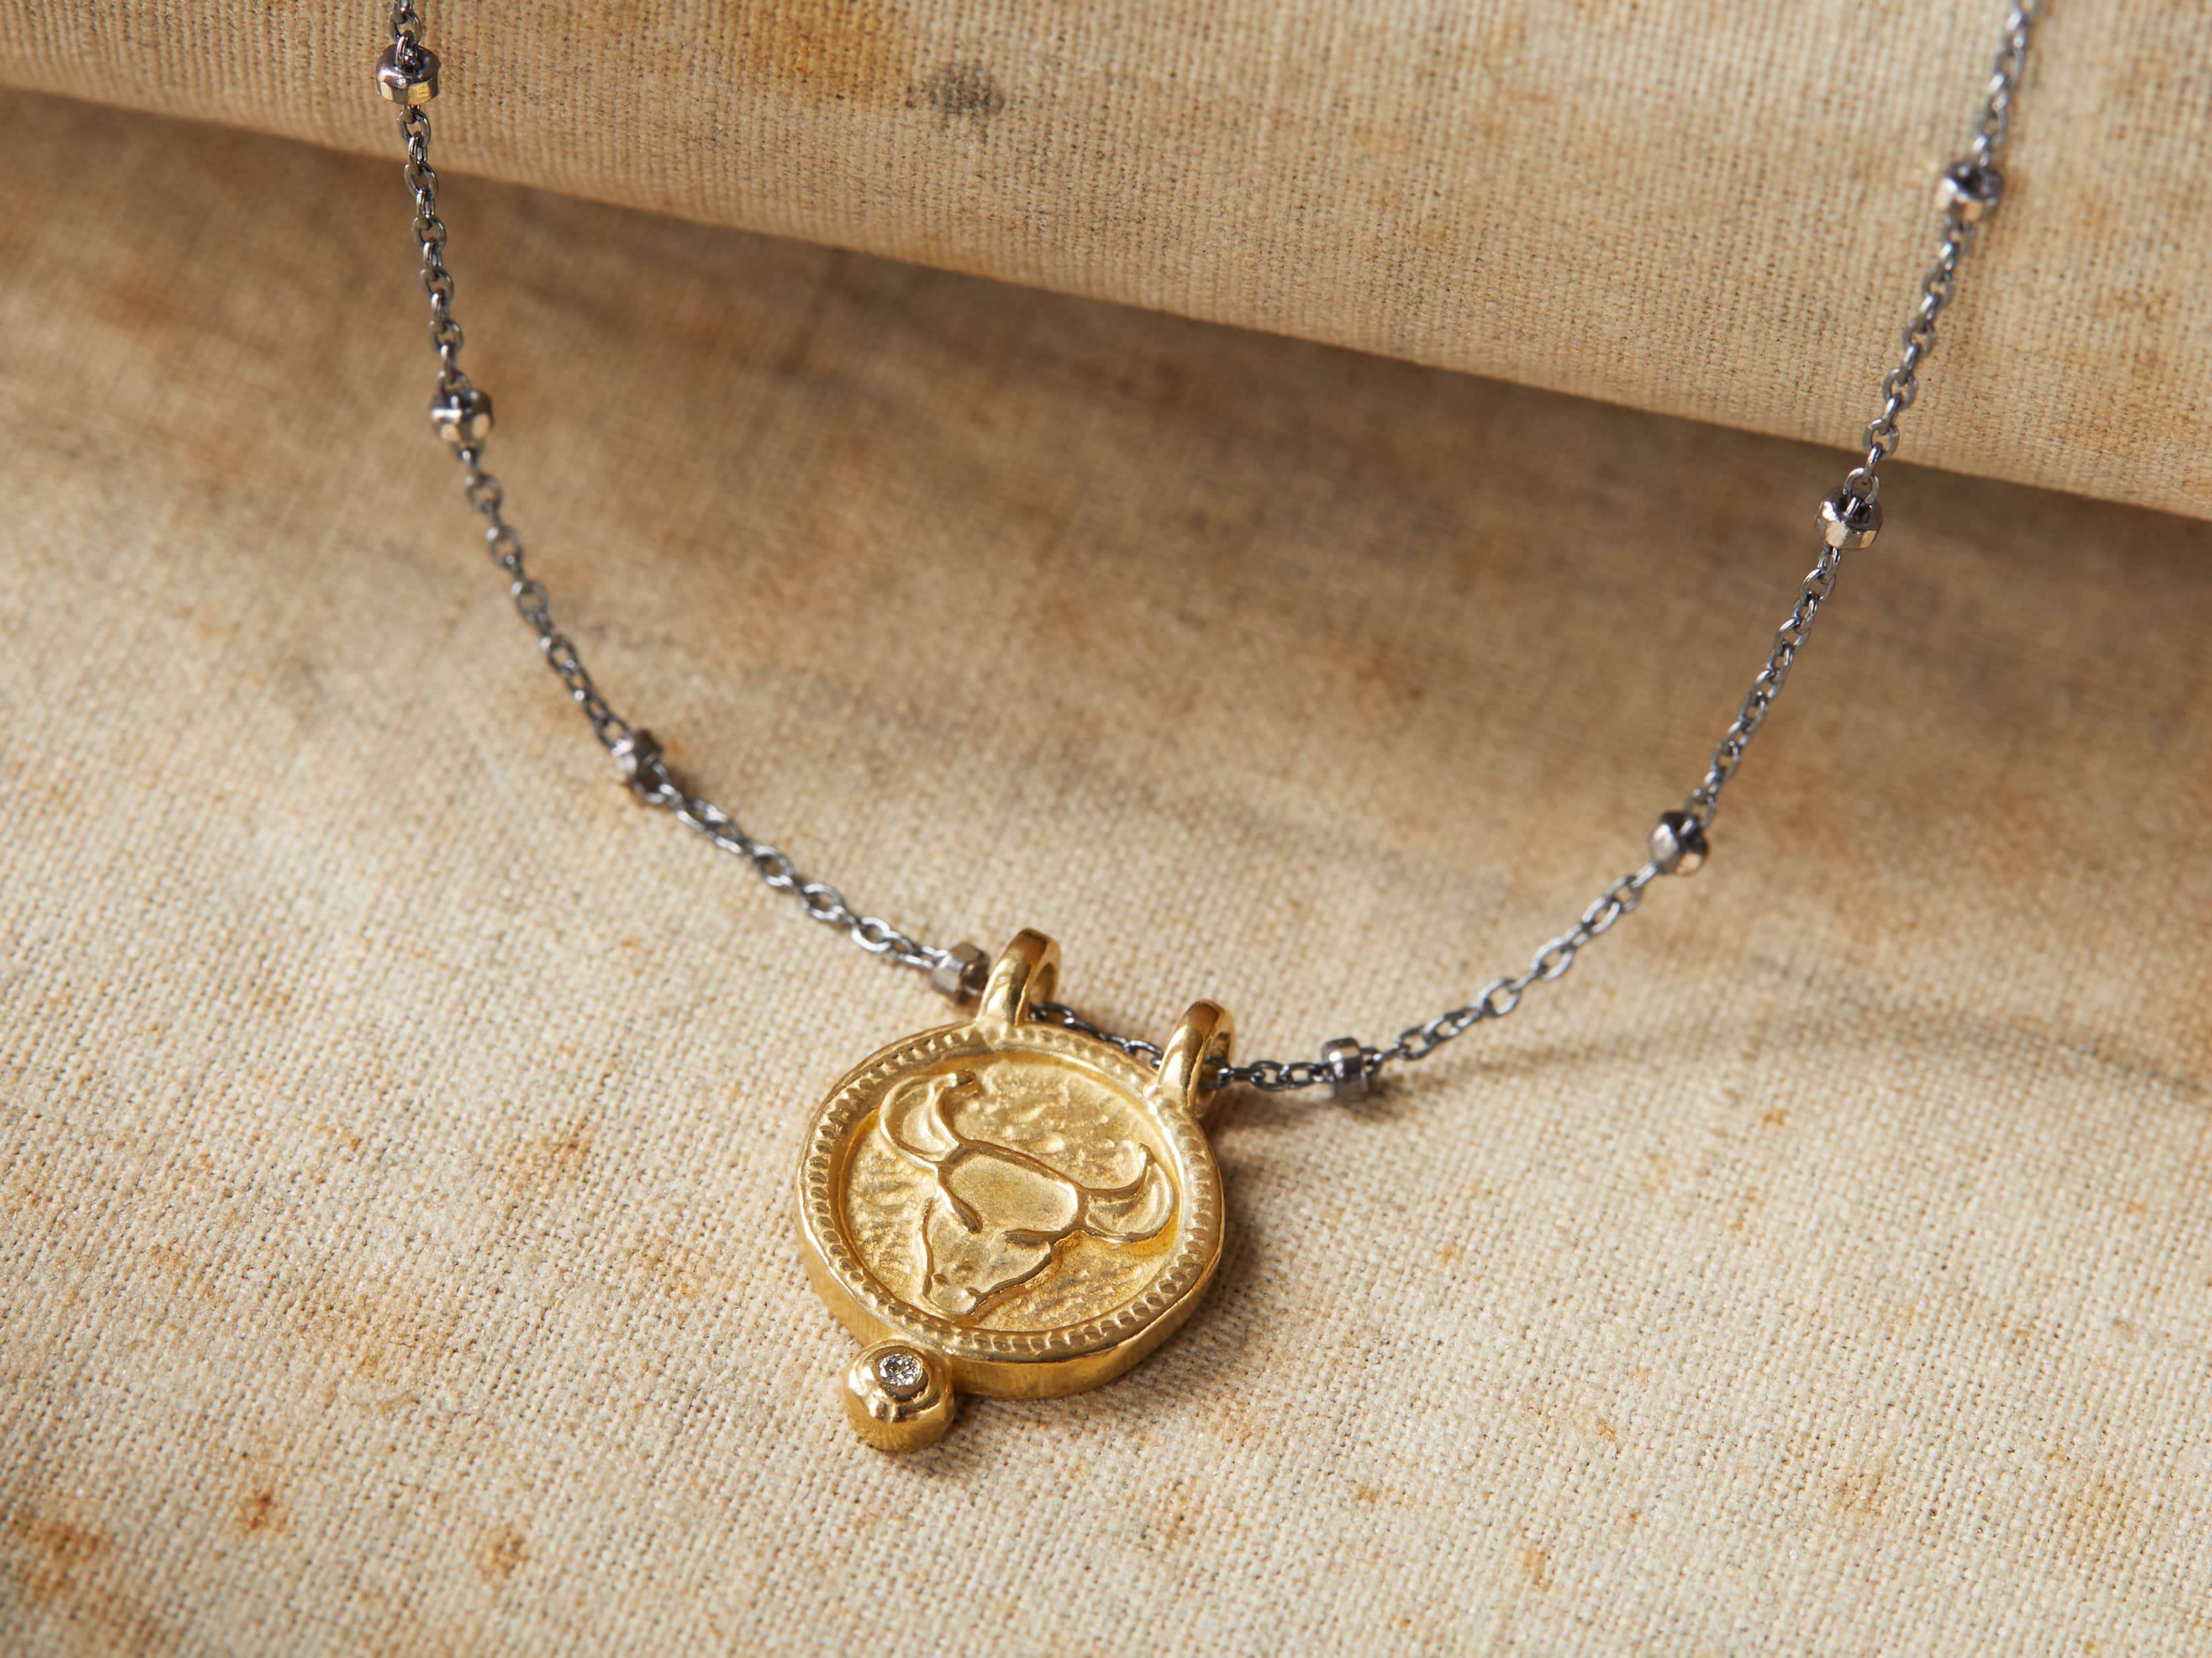 Gold Taurus Necklace Gold, Taurus Zodiac Necklace 14k Gold Filled, Taurus  Necklace for Women, Taurus Gift, Taurus Jewelry, Taurus Pendant - Etsy